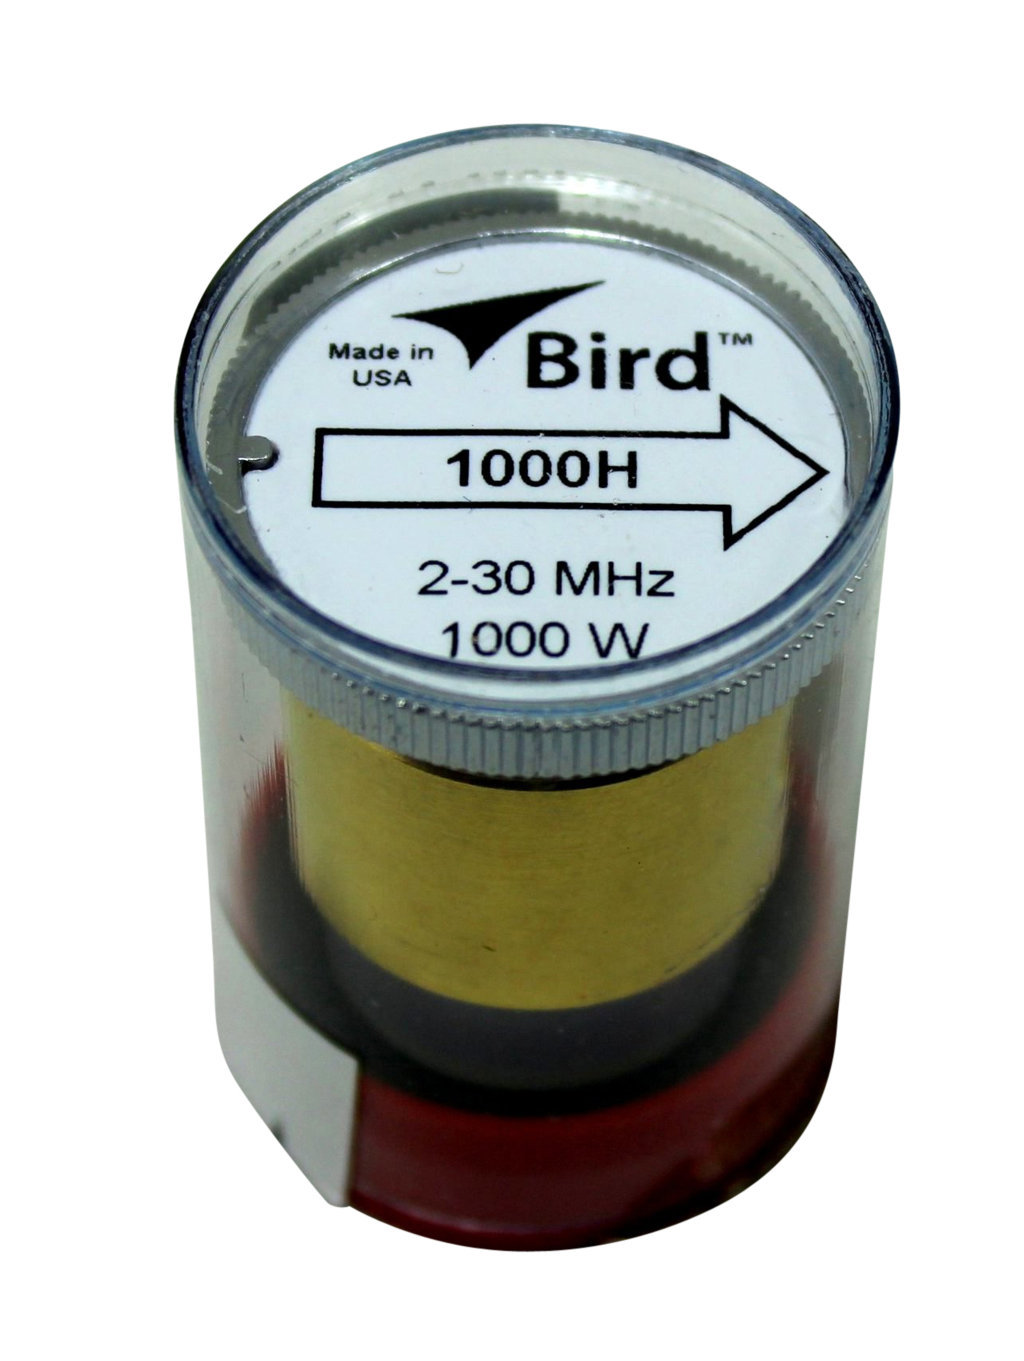 Bird Electronic - Bird Element 1000H 1000W 2-30 MHz #BRD-1000H